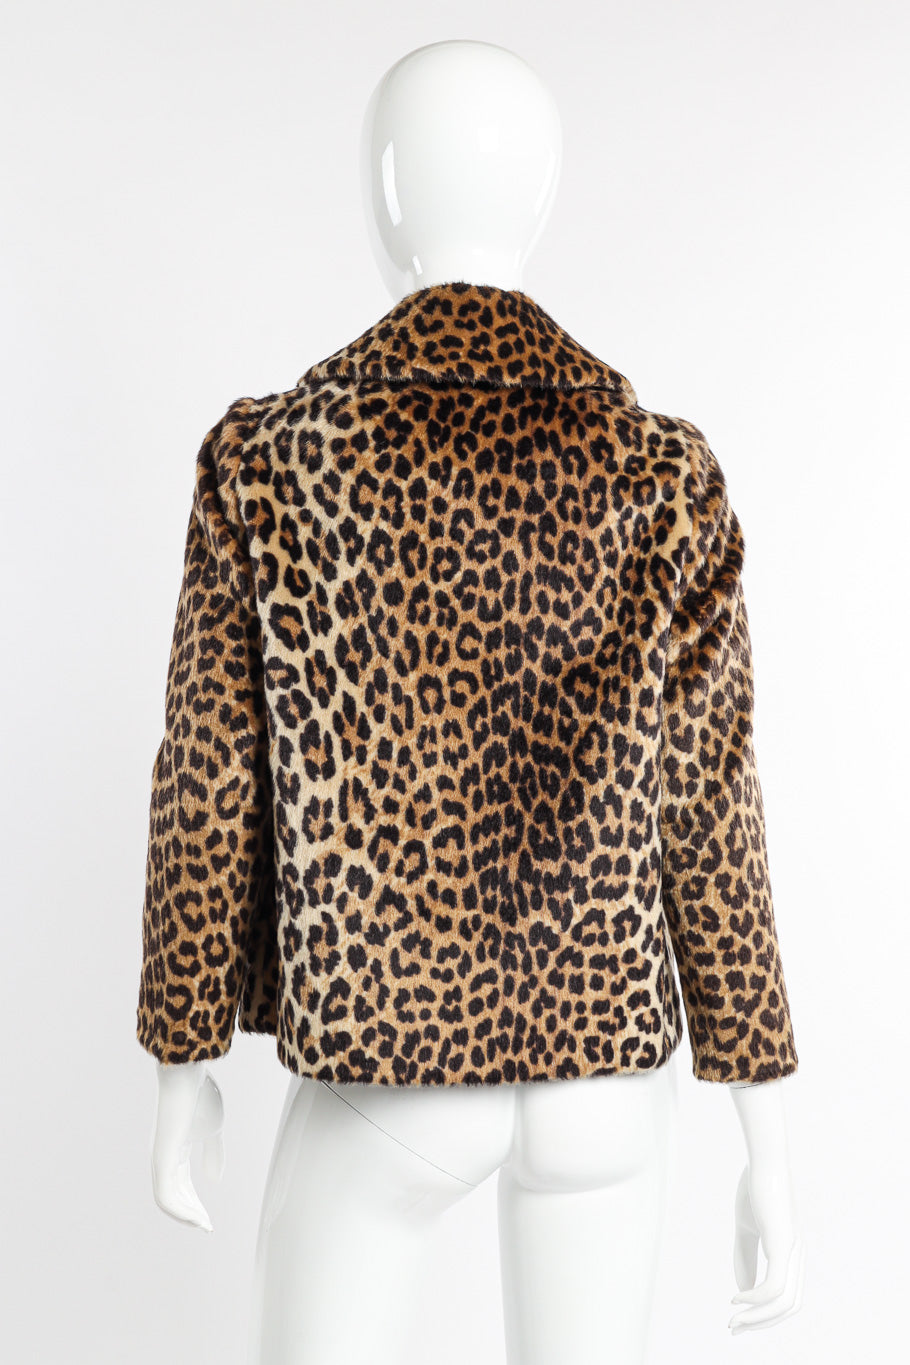 Vintage Marcus Leopard Print Jacket back view on mannequin @recessla